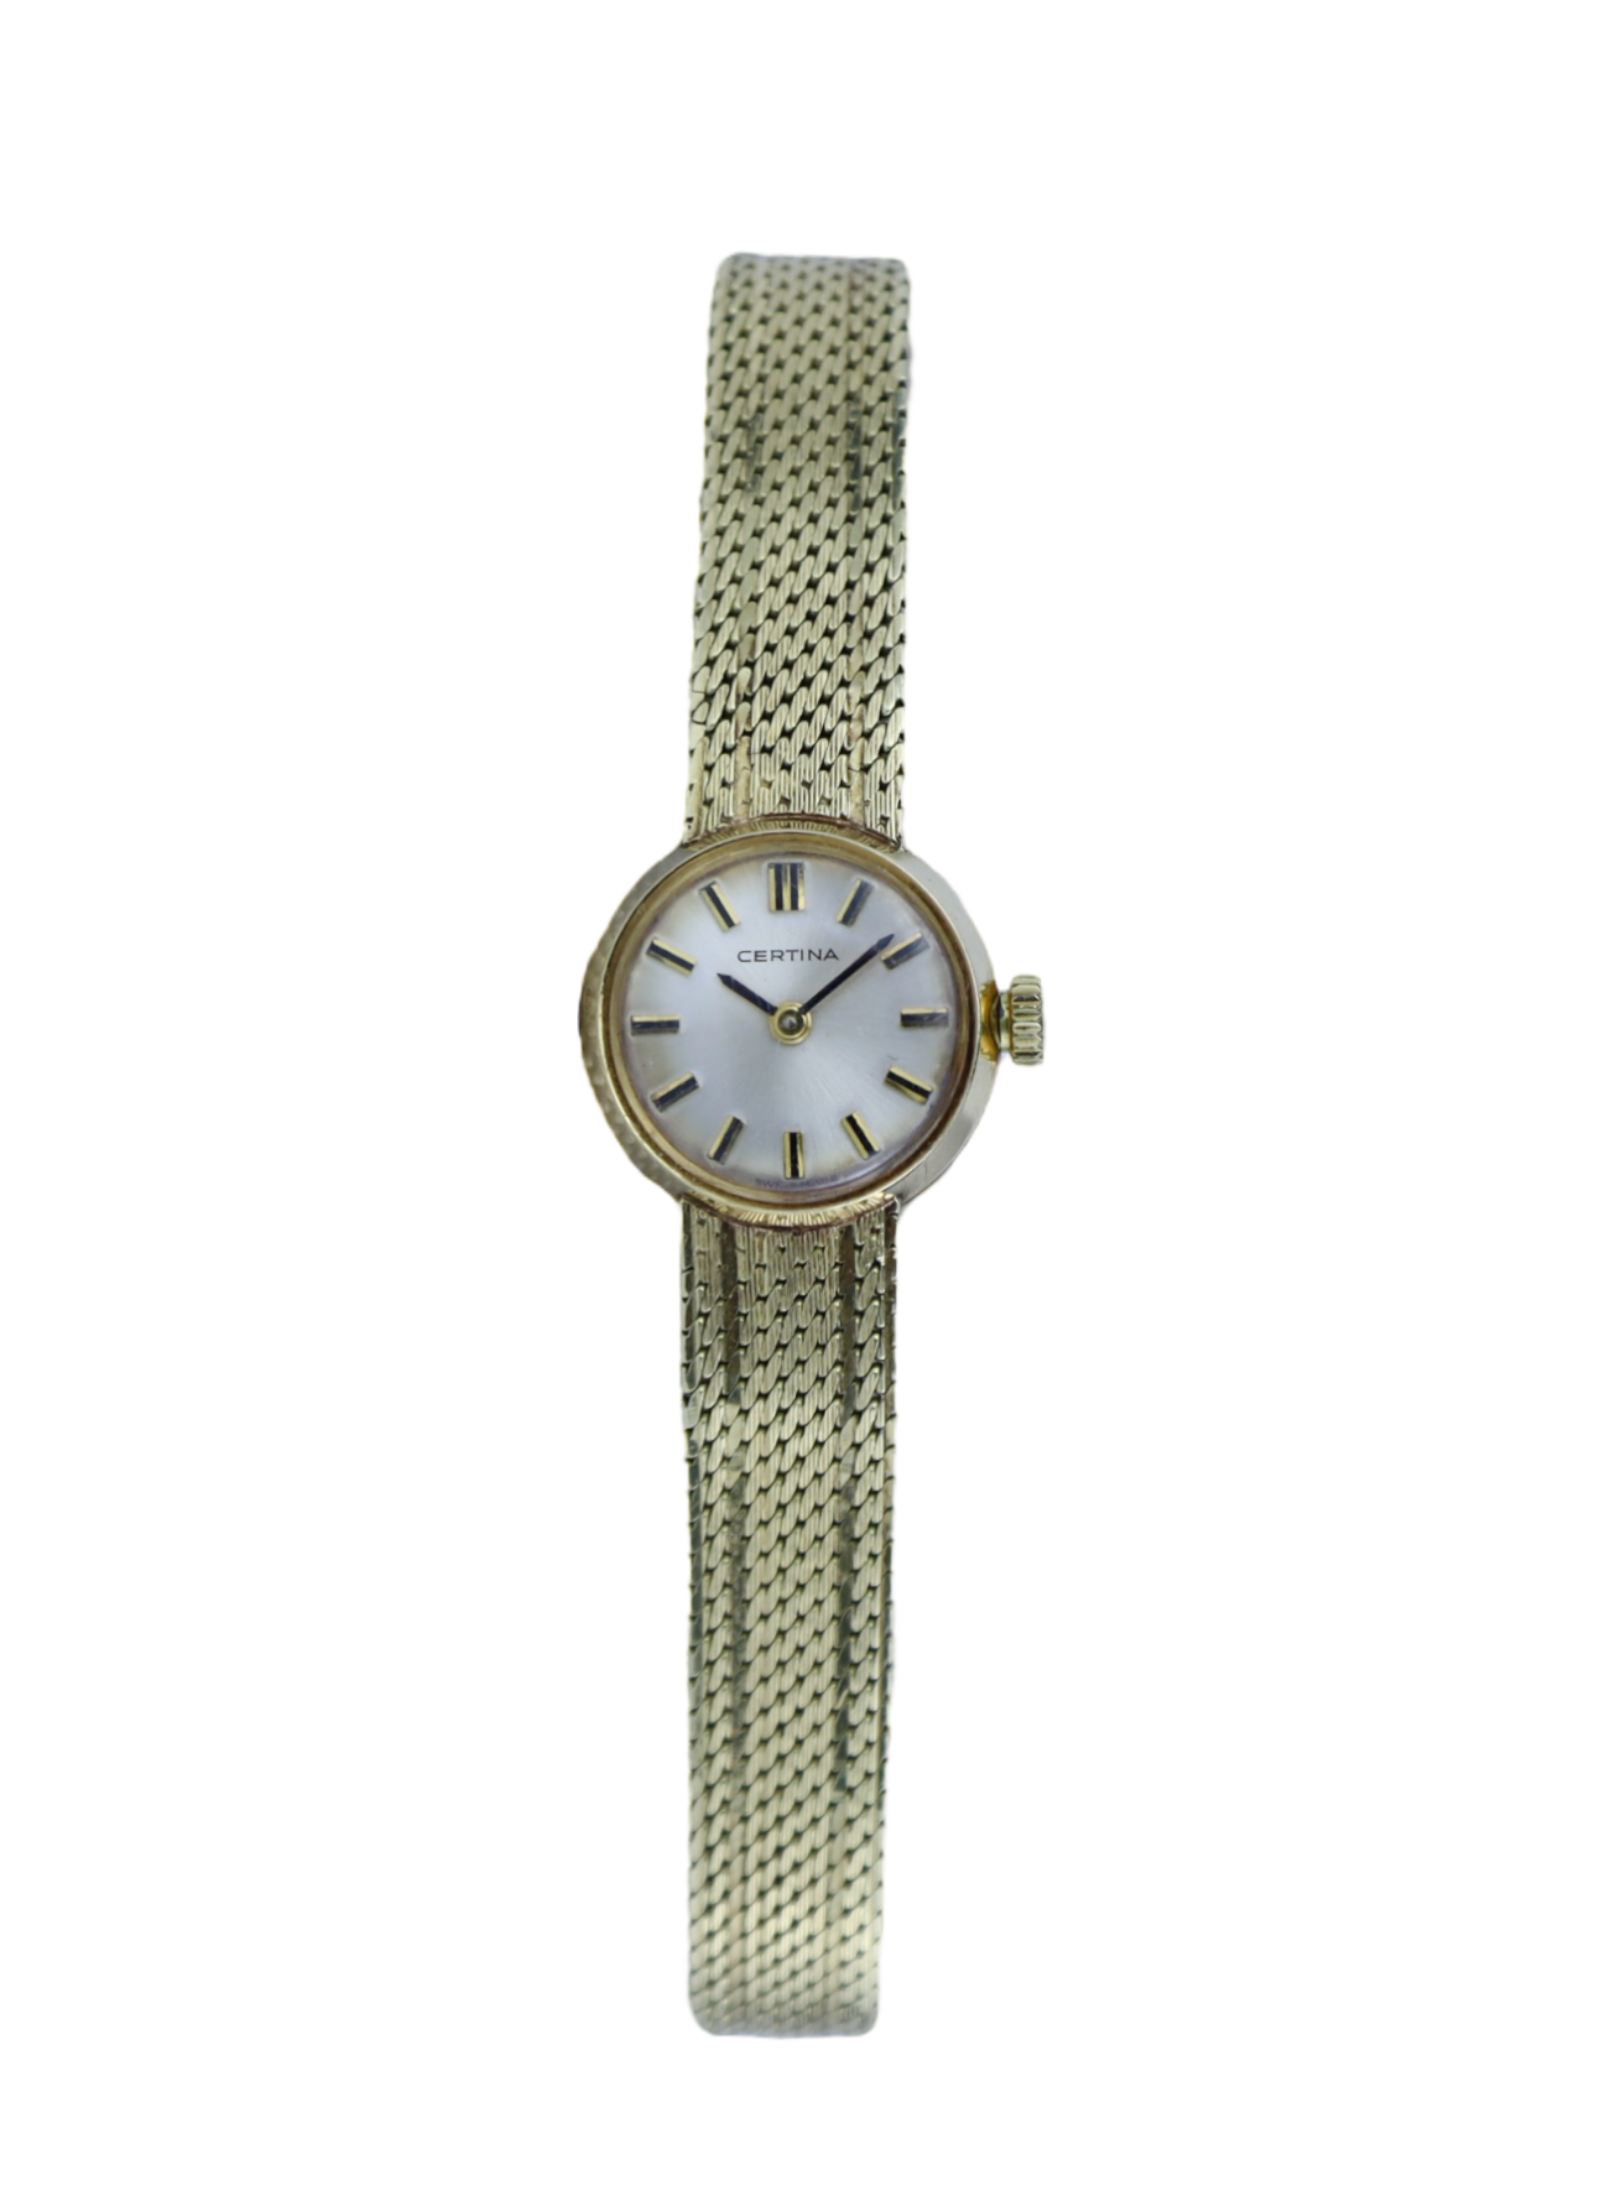 1970s 14K Certina Cocktail Watch